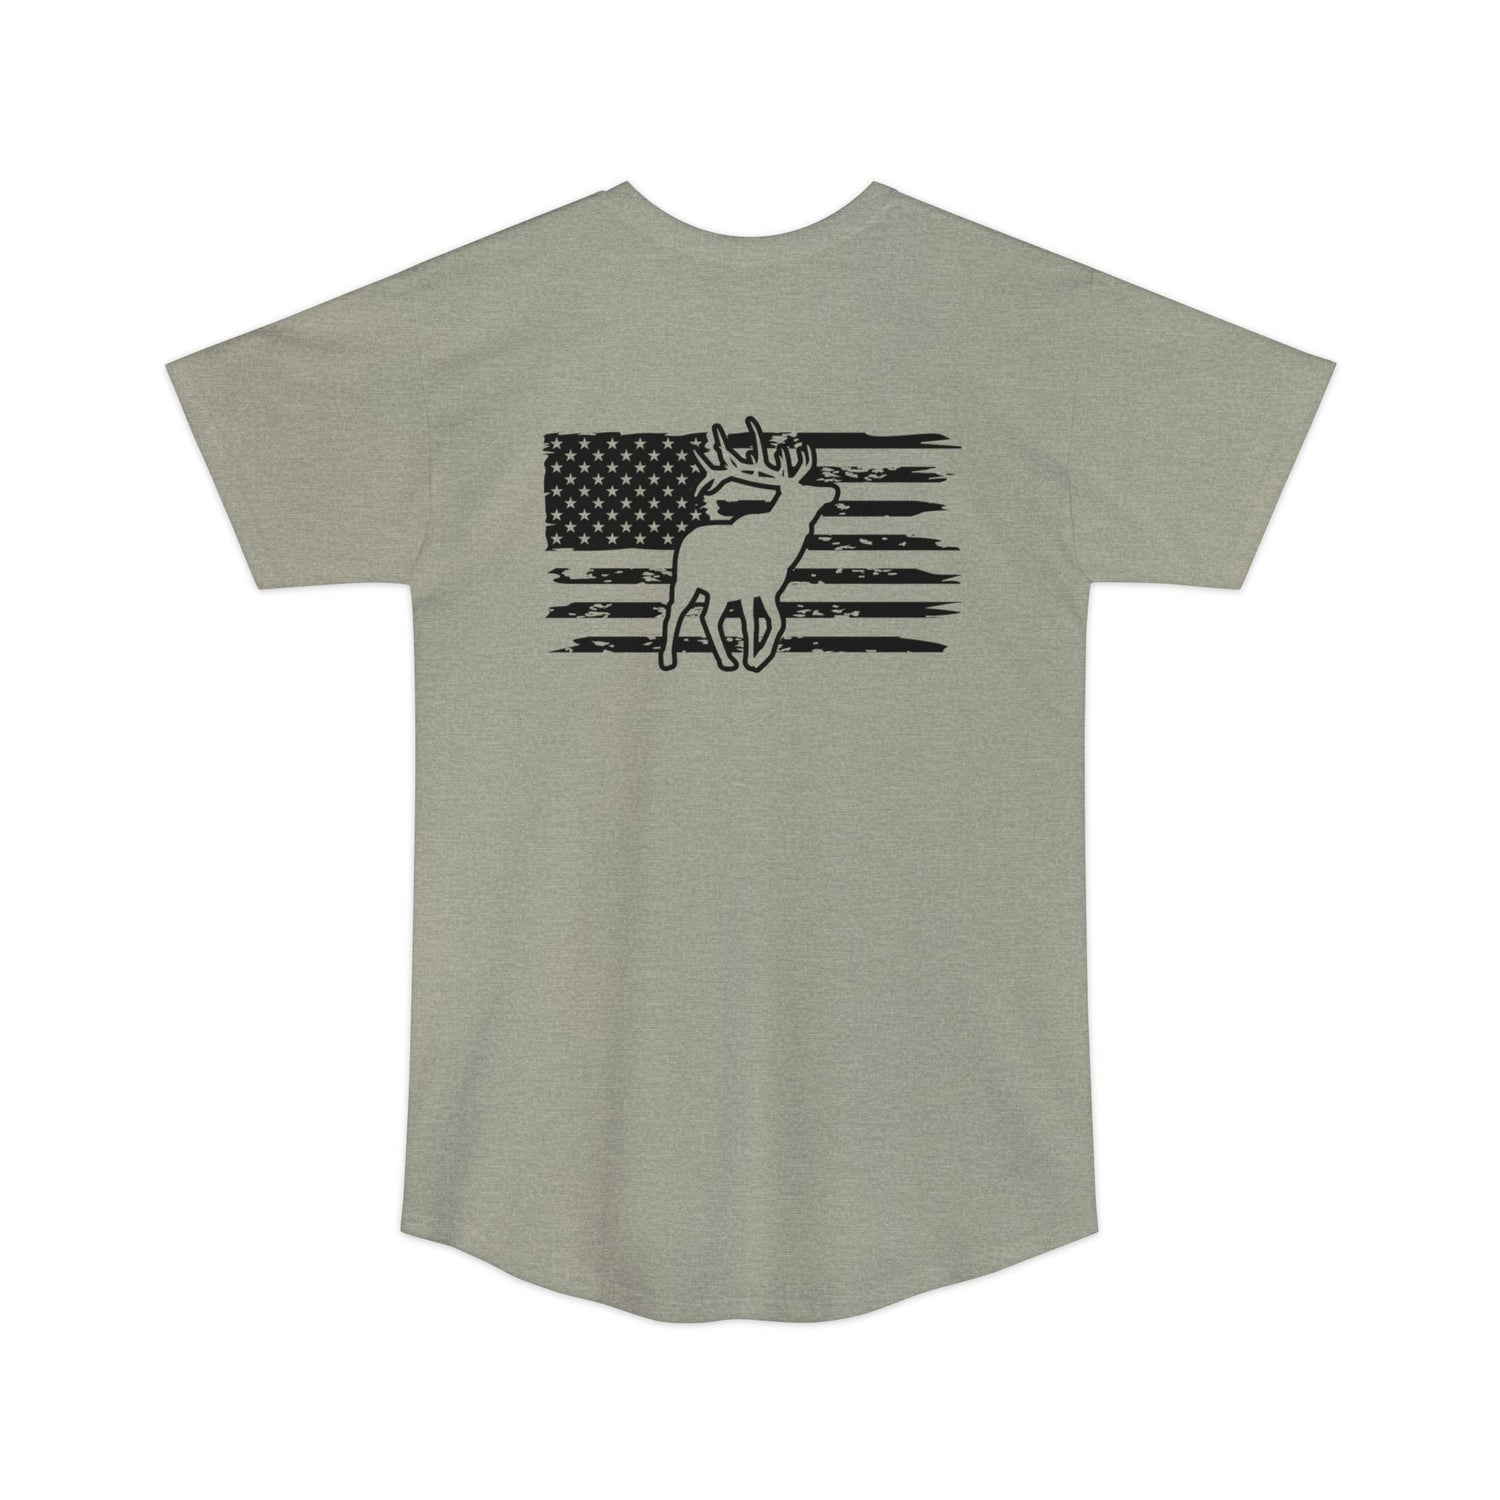 Athletic tall patriotic elk hunting t-shirt, color light grey, back design placement